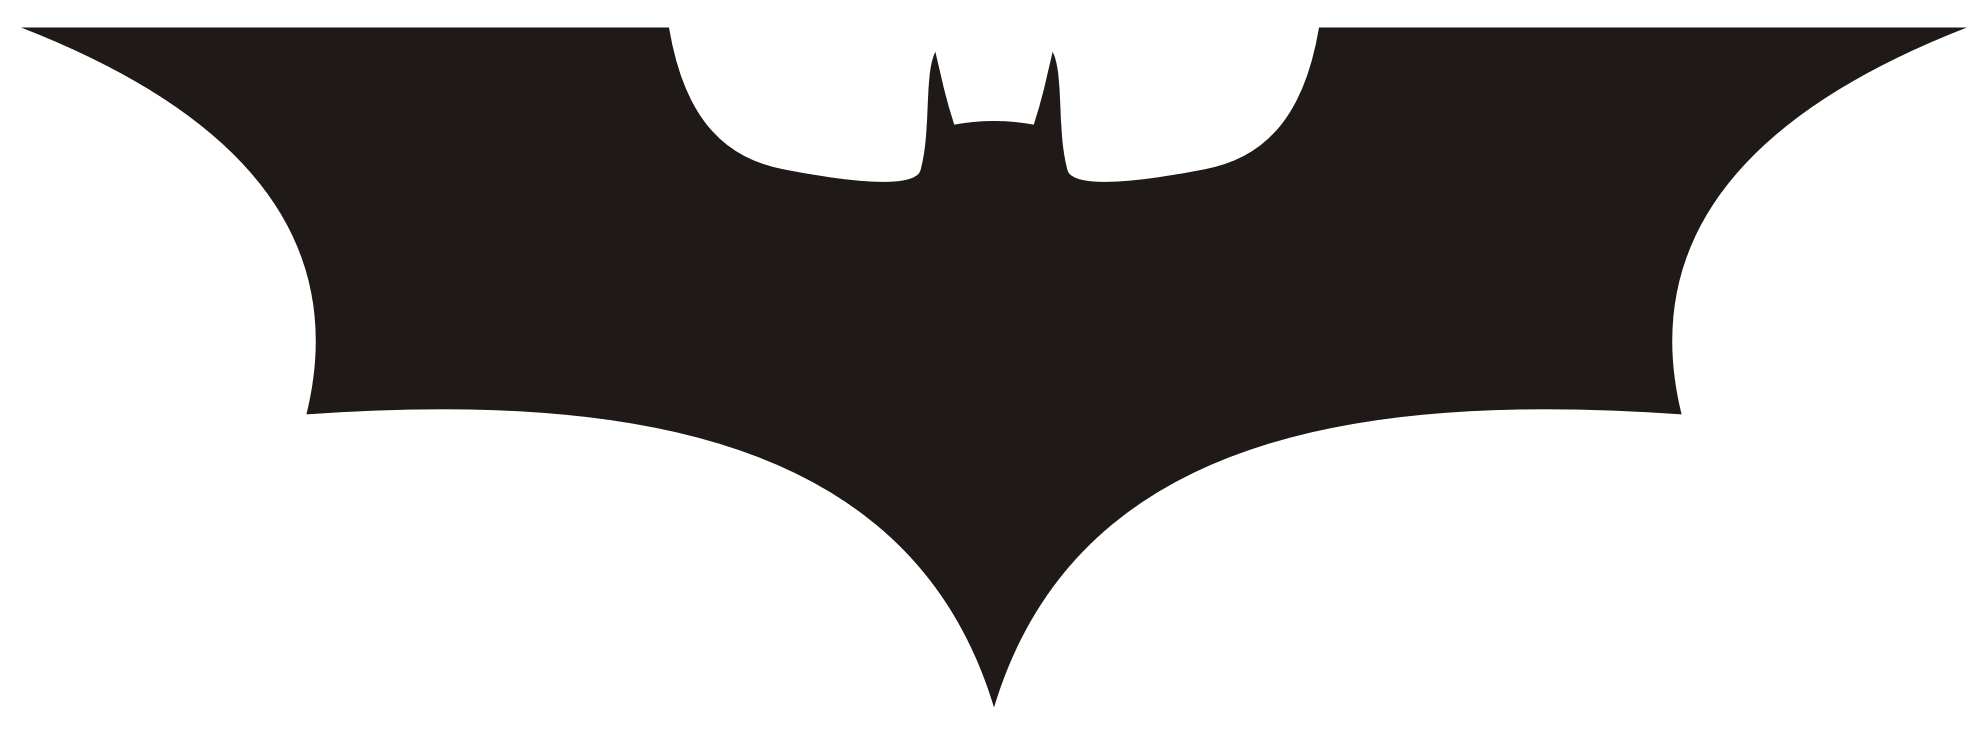 Amazing BATMAN TATTOO ART From Around The World! - All About Batman